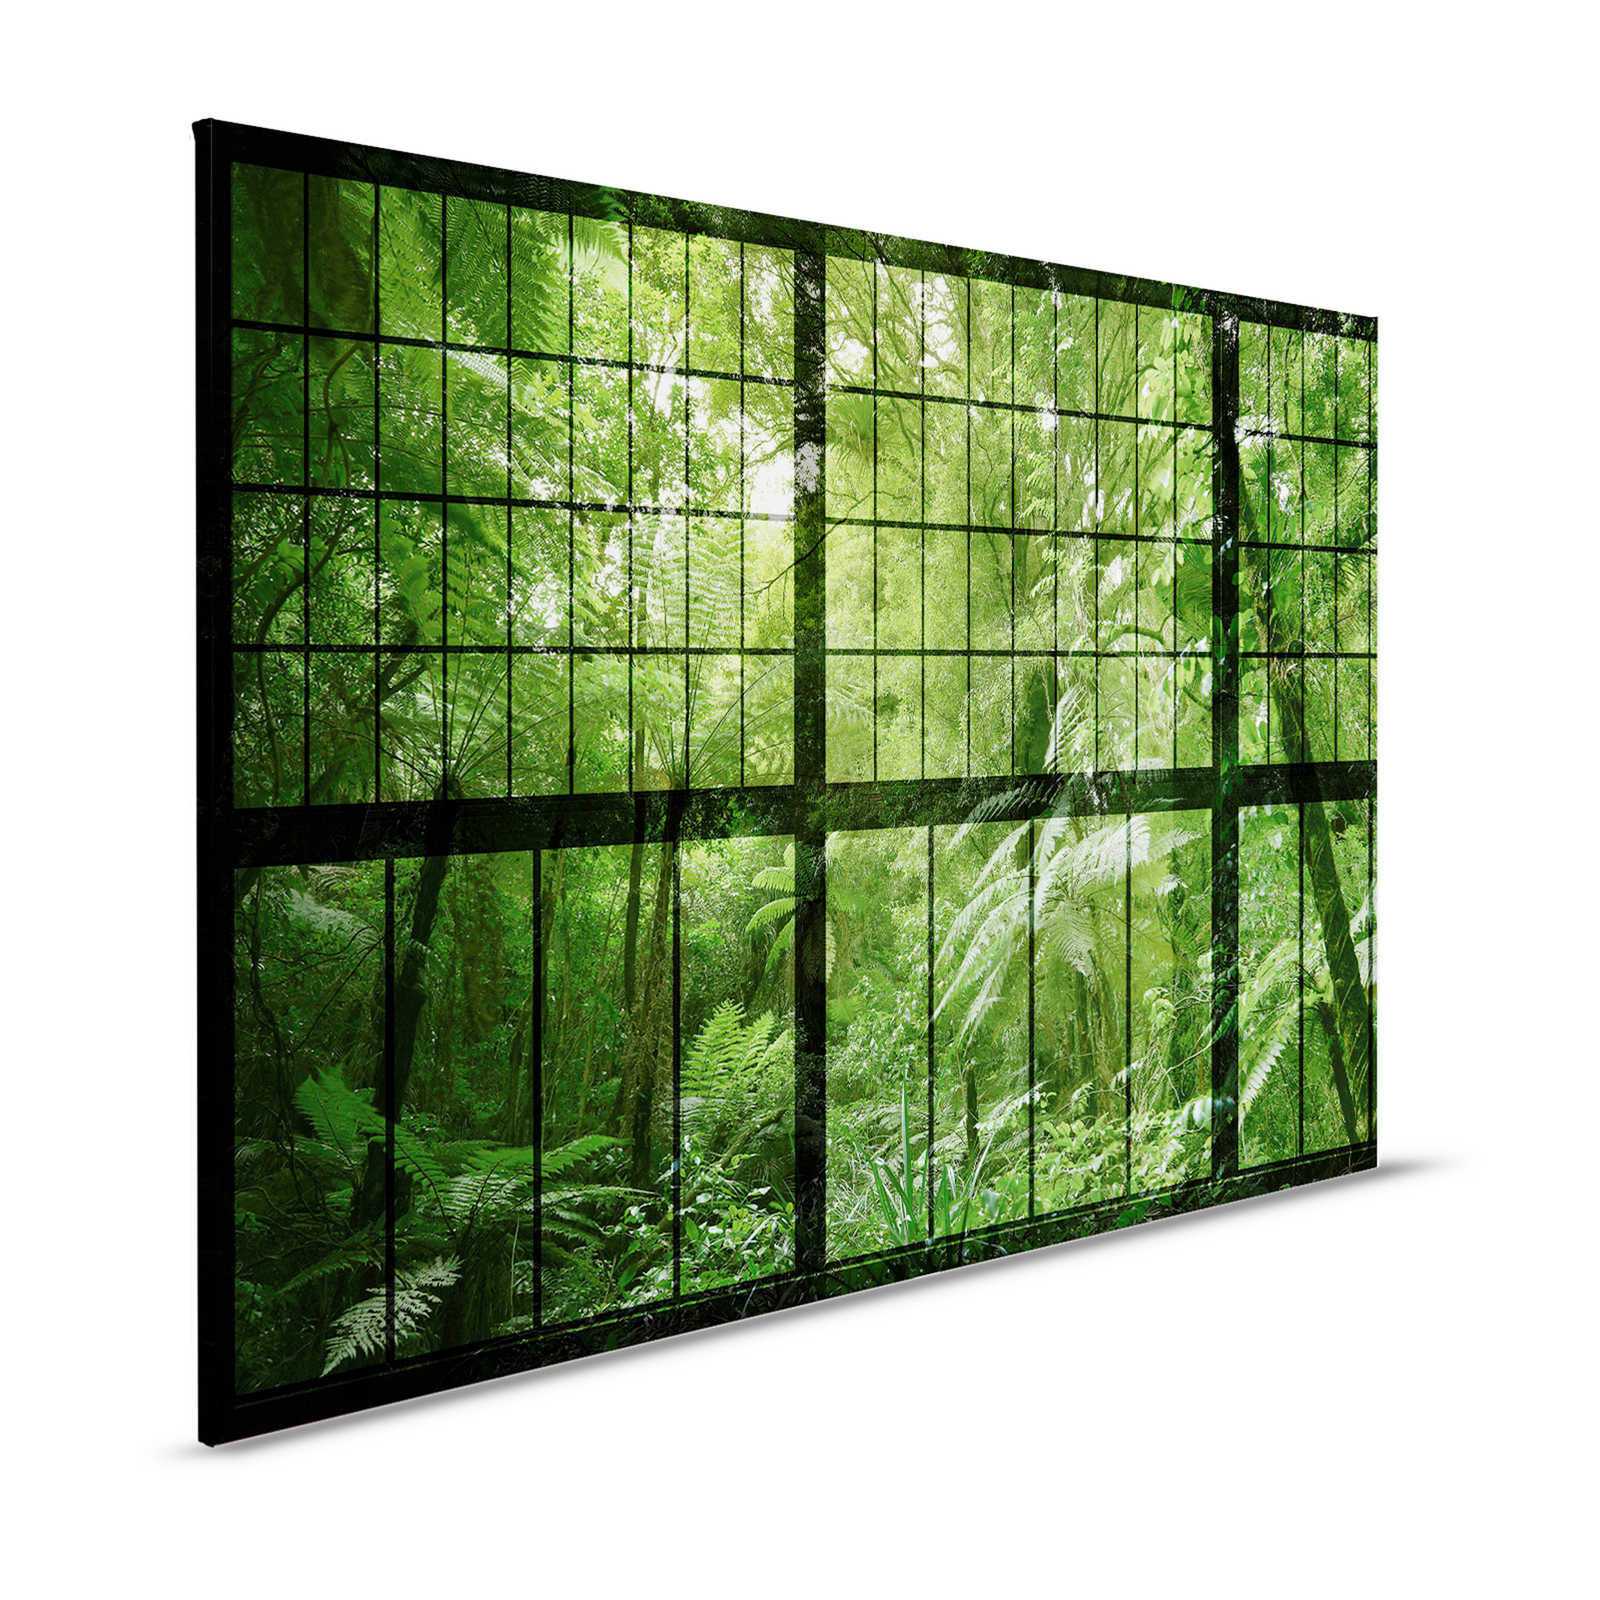 Rainforest 2 - Pintura en lienzo con vista a la selva - 1,20 m x 0,80 m
